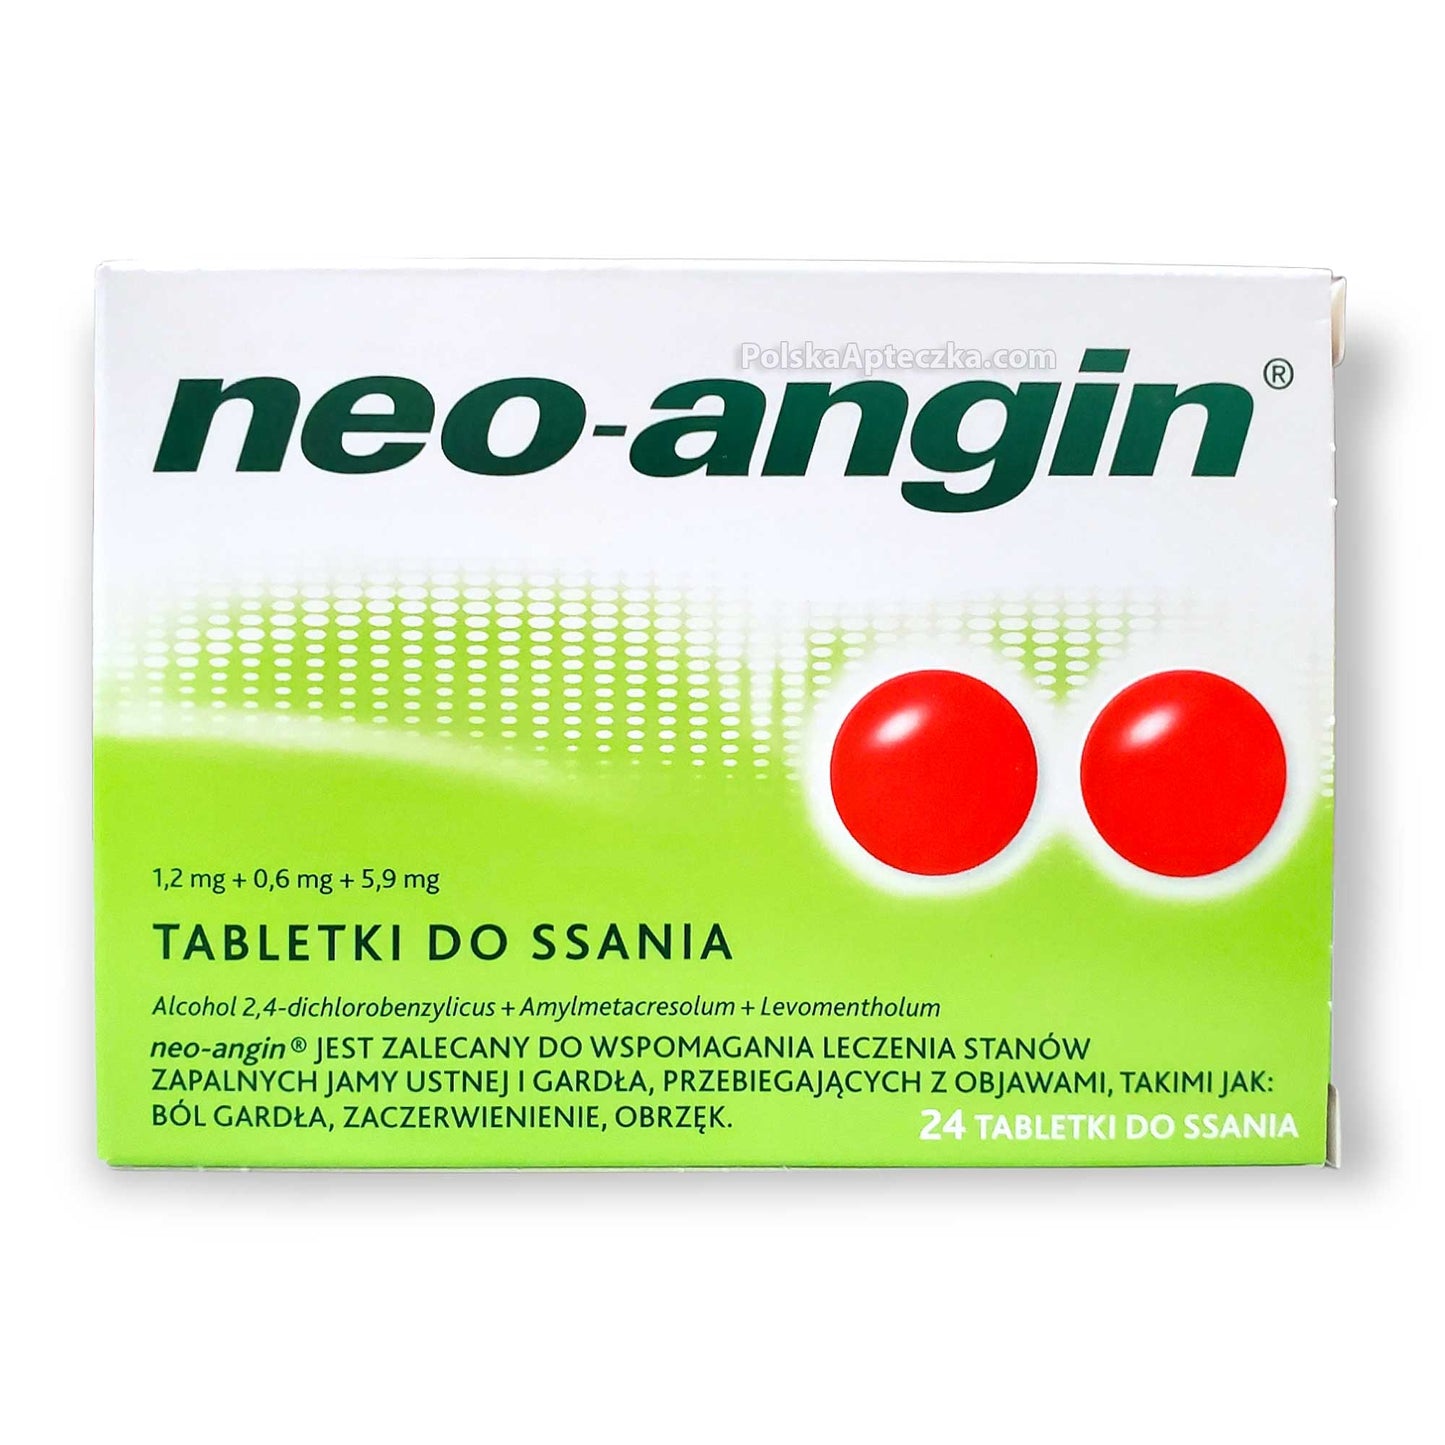 neo-angin tabletki